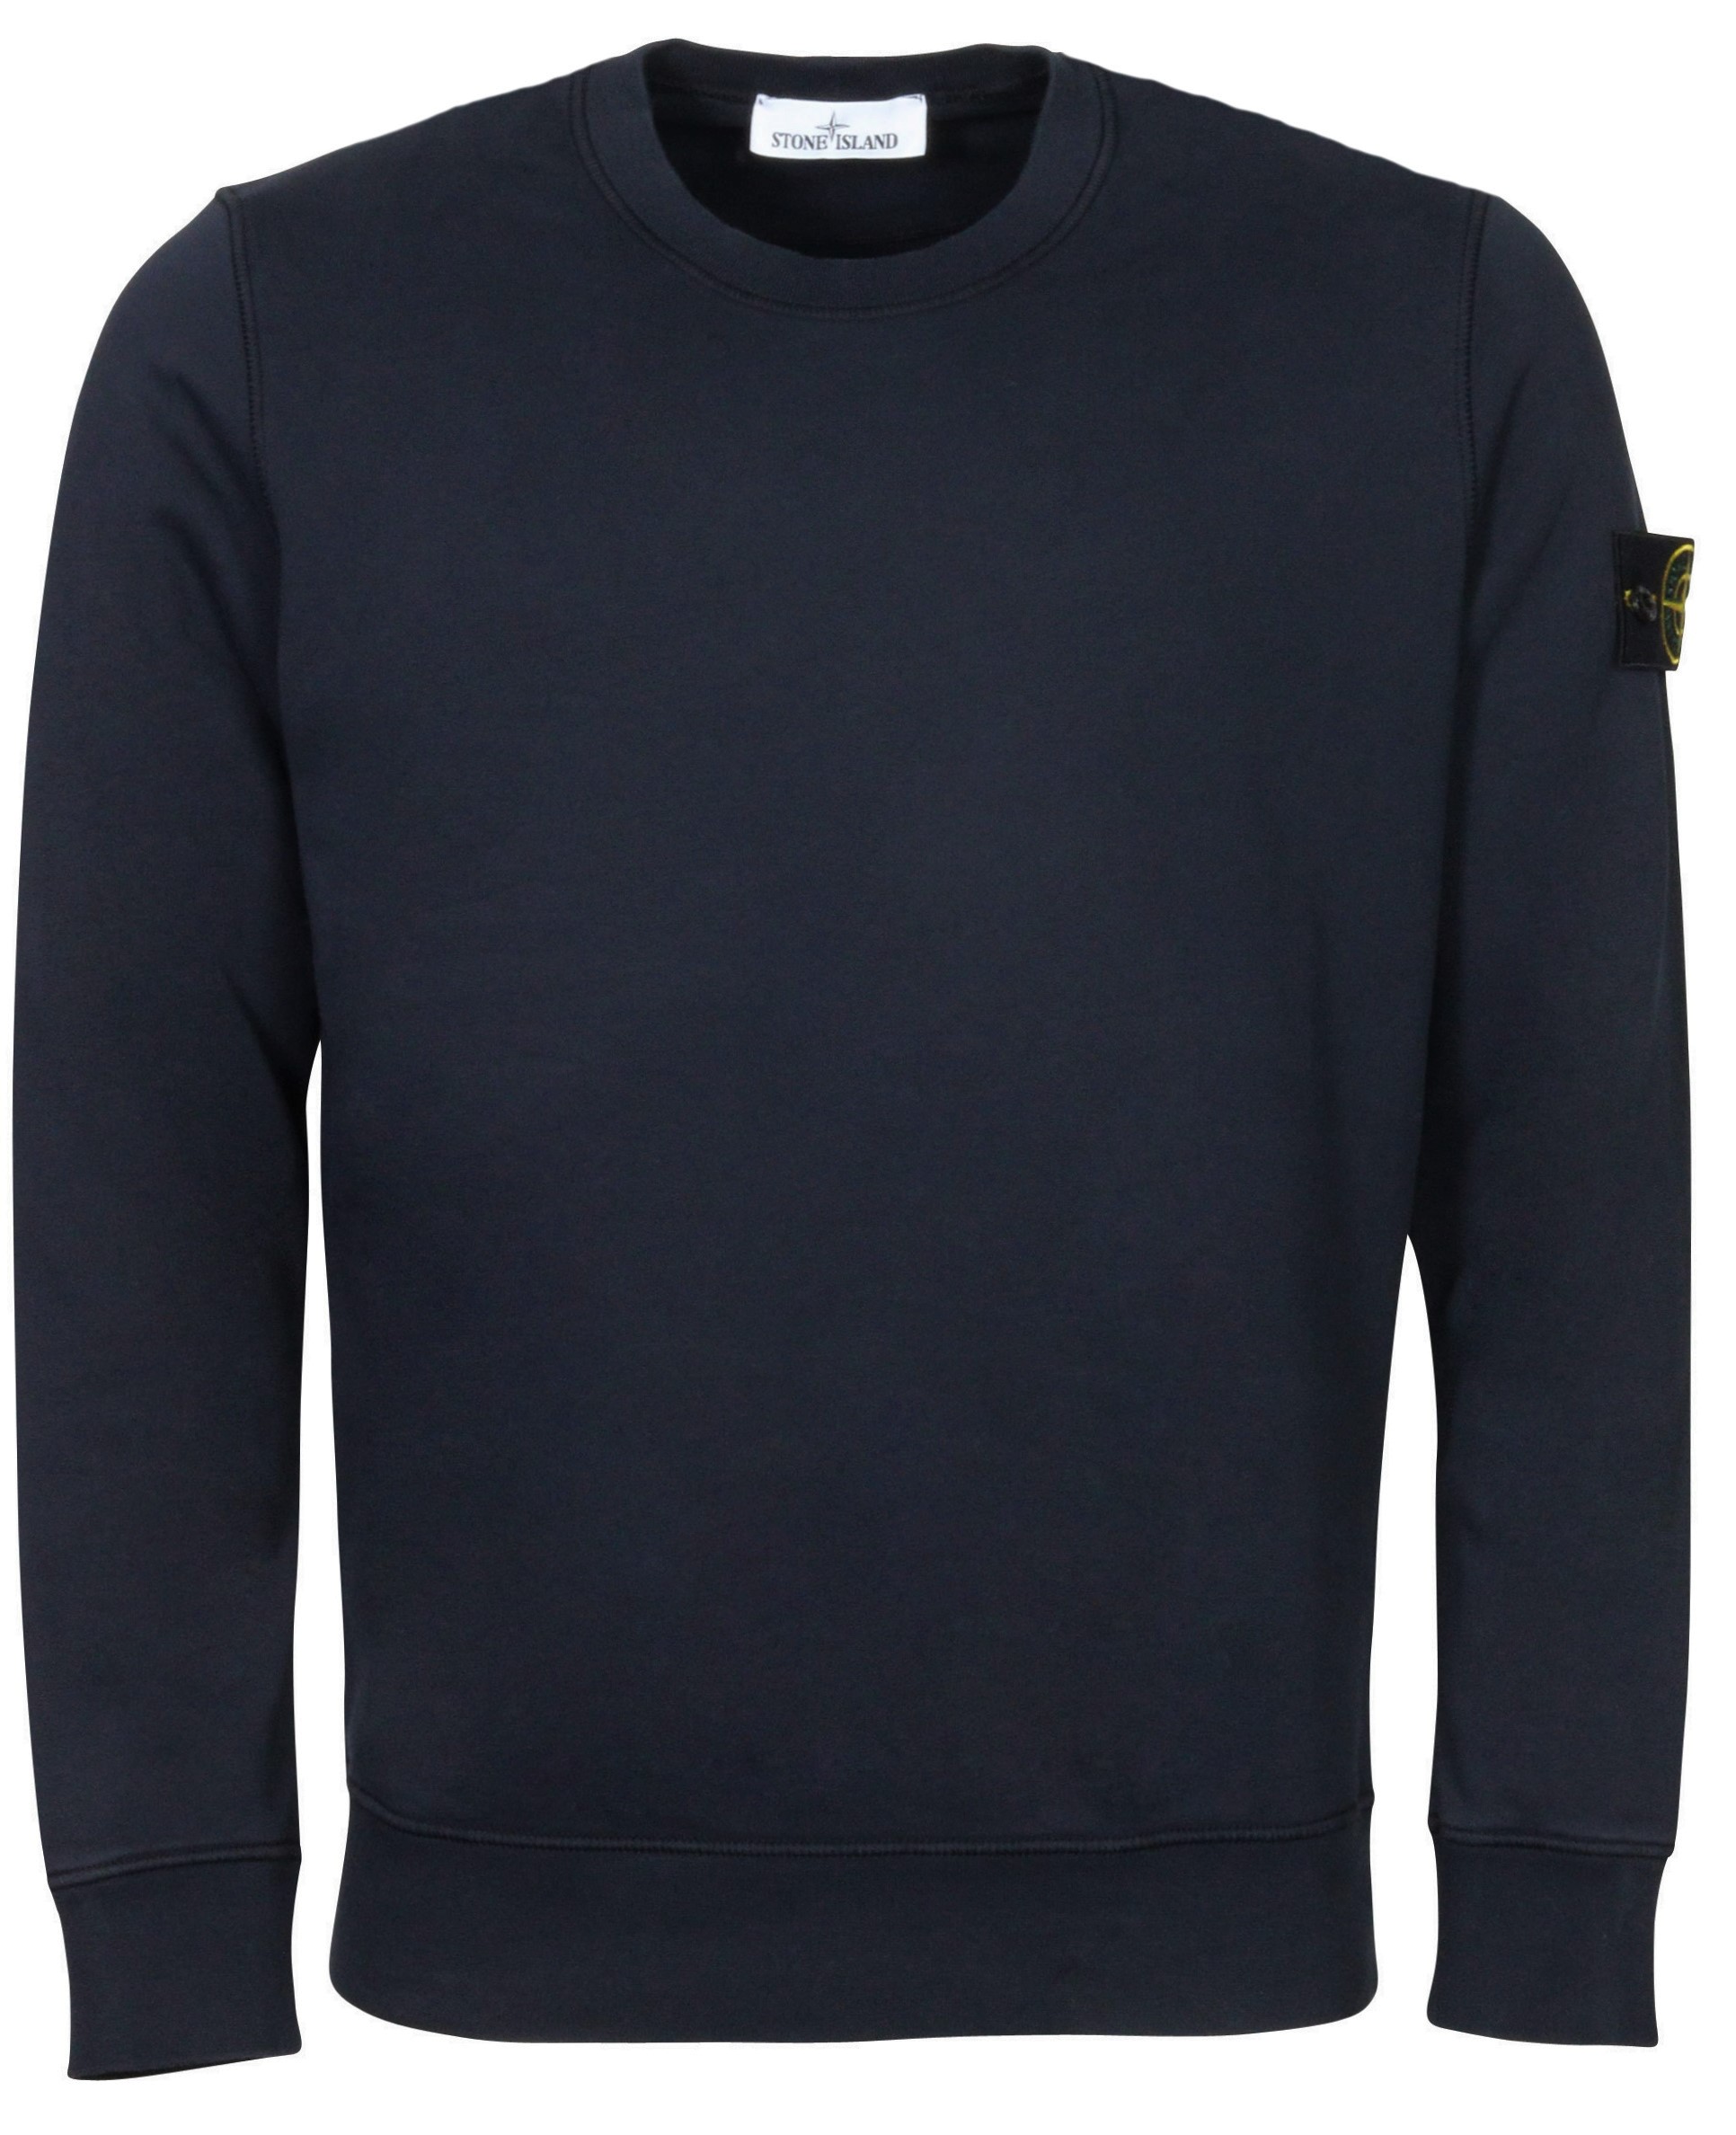 STONE ISLAND Sweatshirt in Navy Blue XL